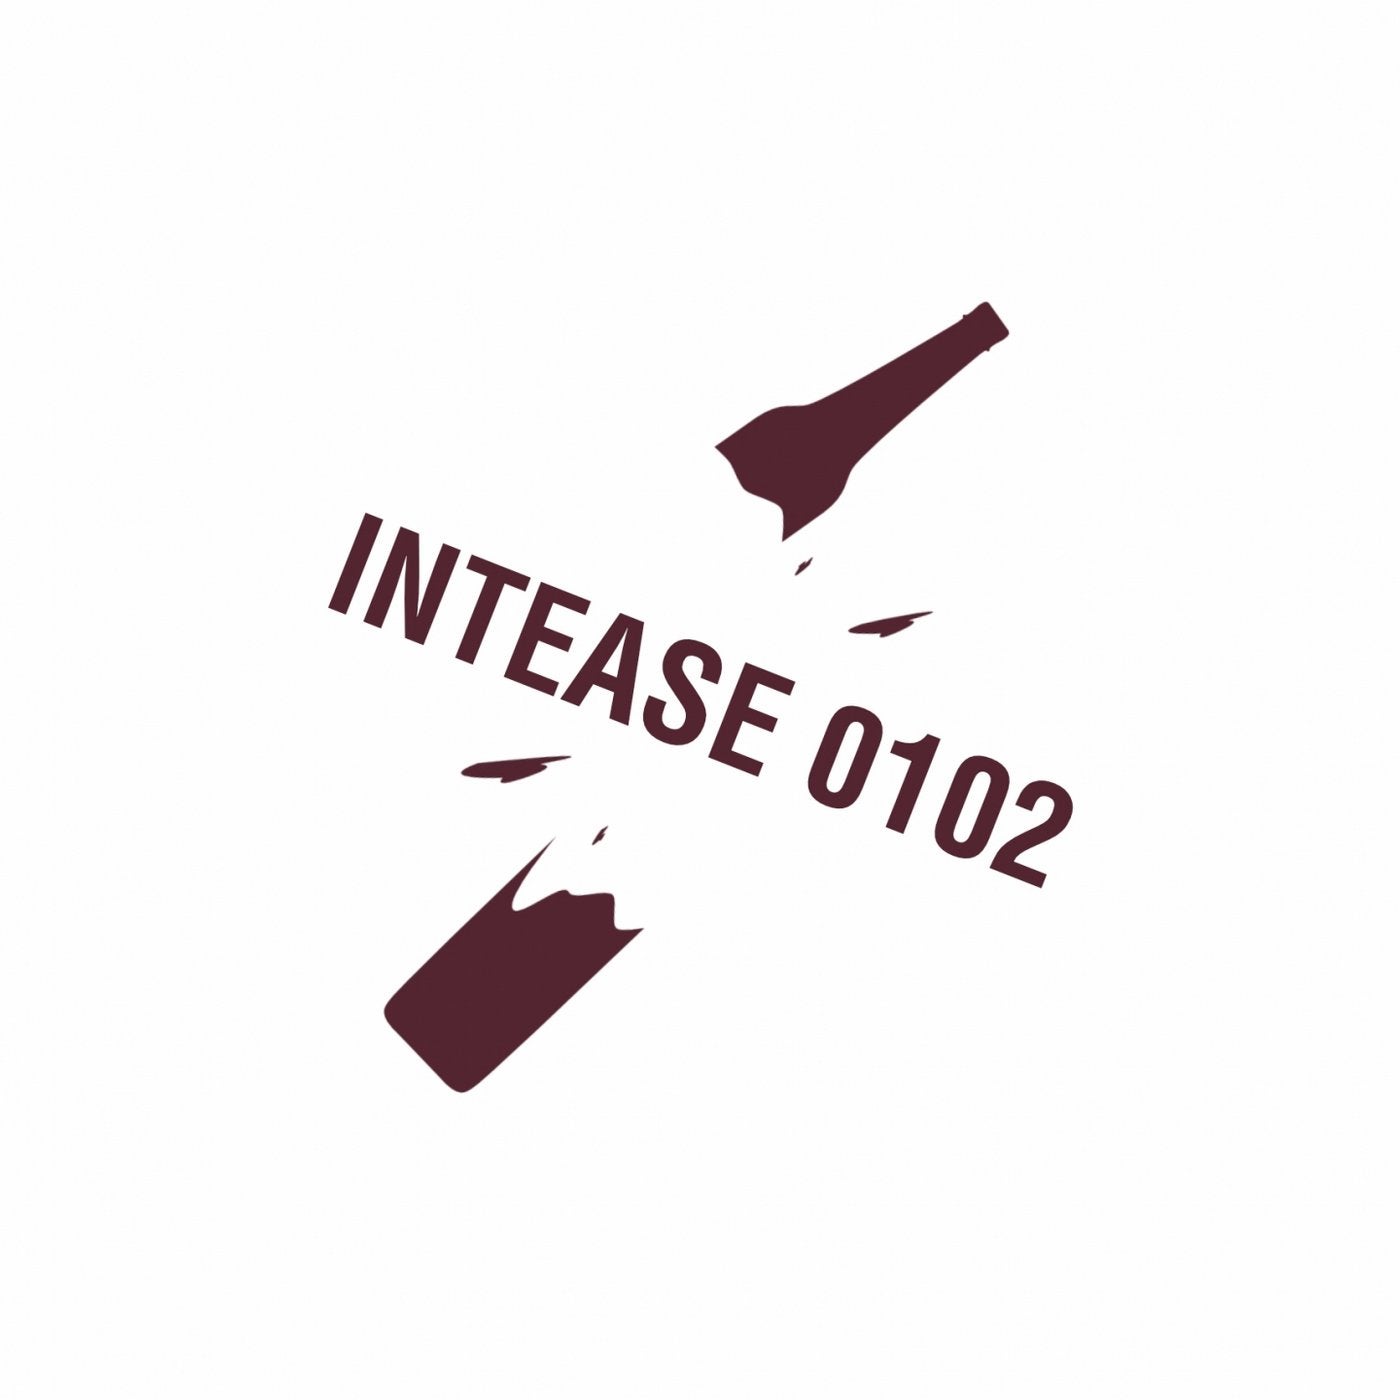 Intease 0102